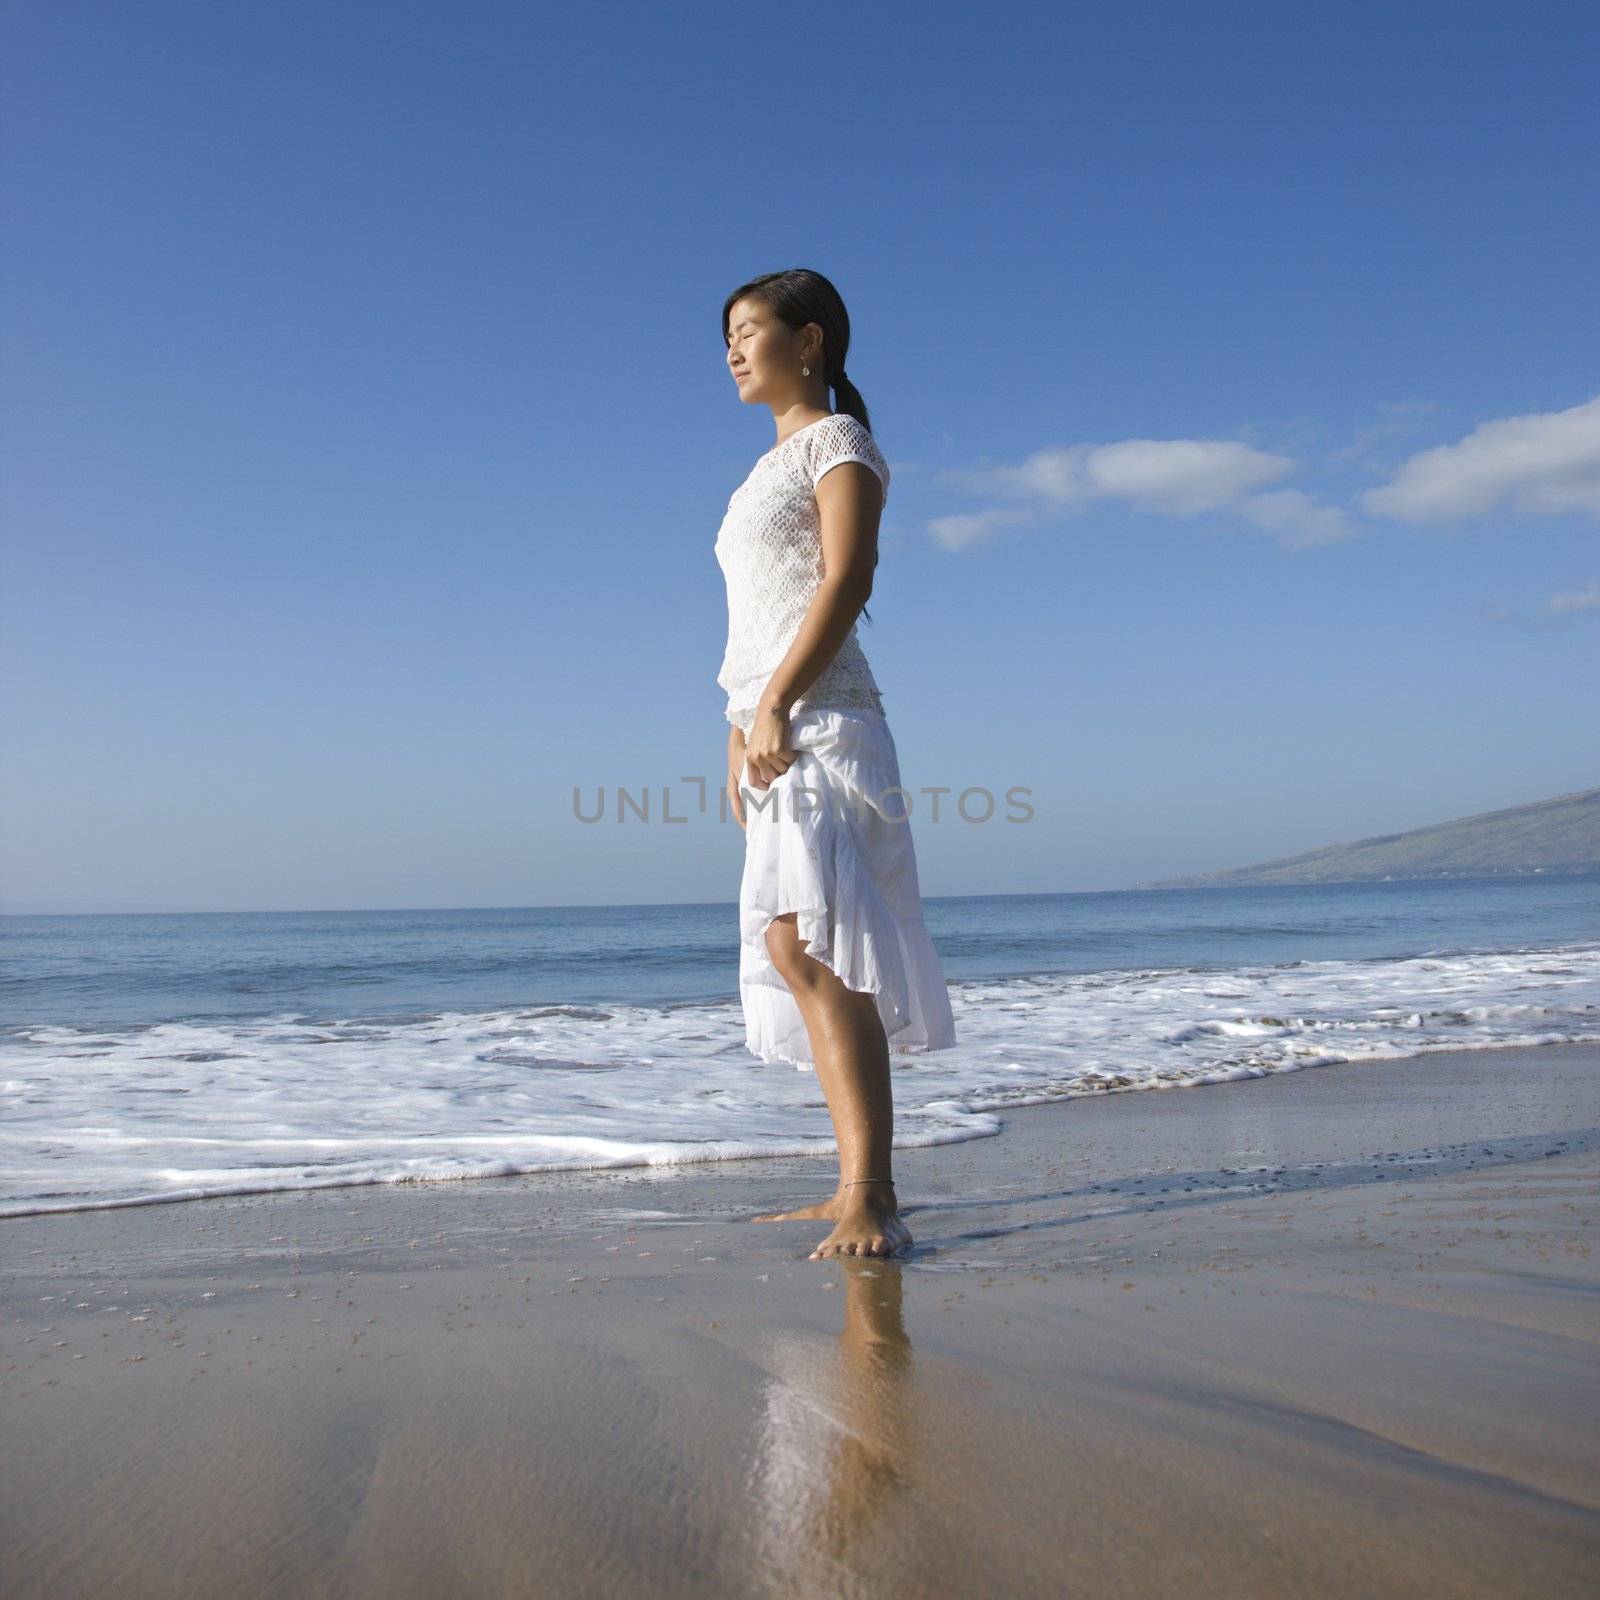 Woman on shoreline. by iofoto